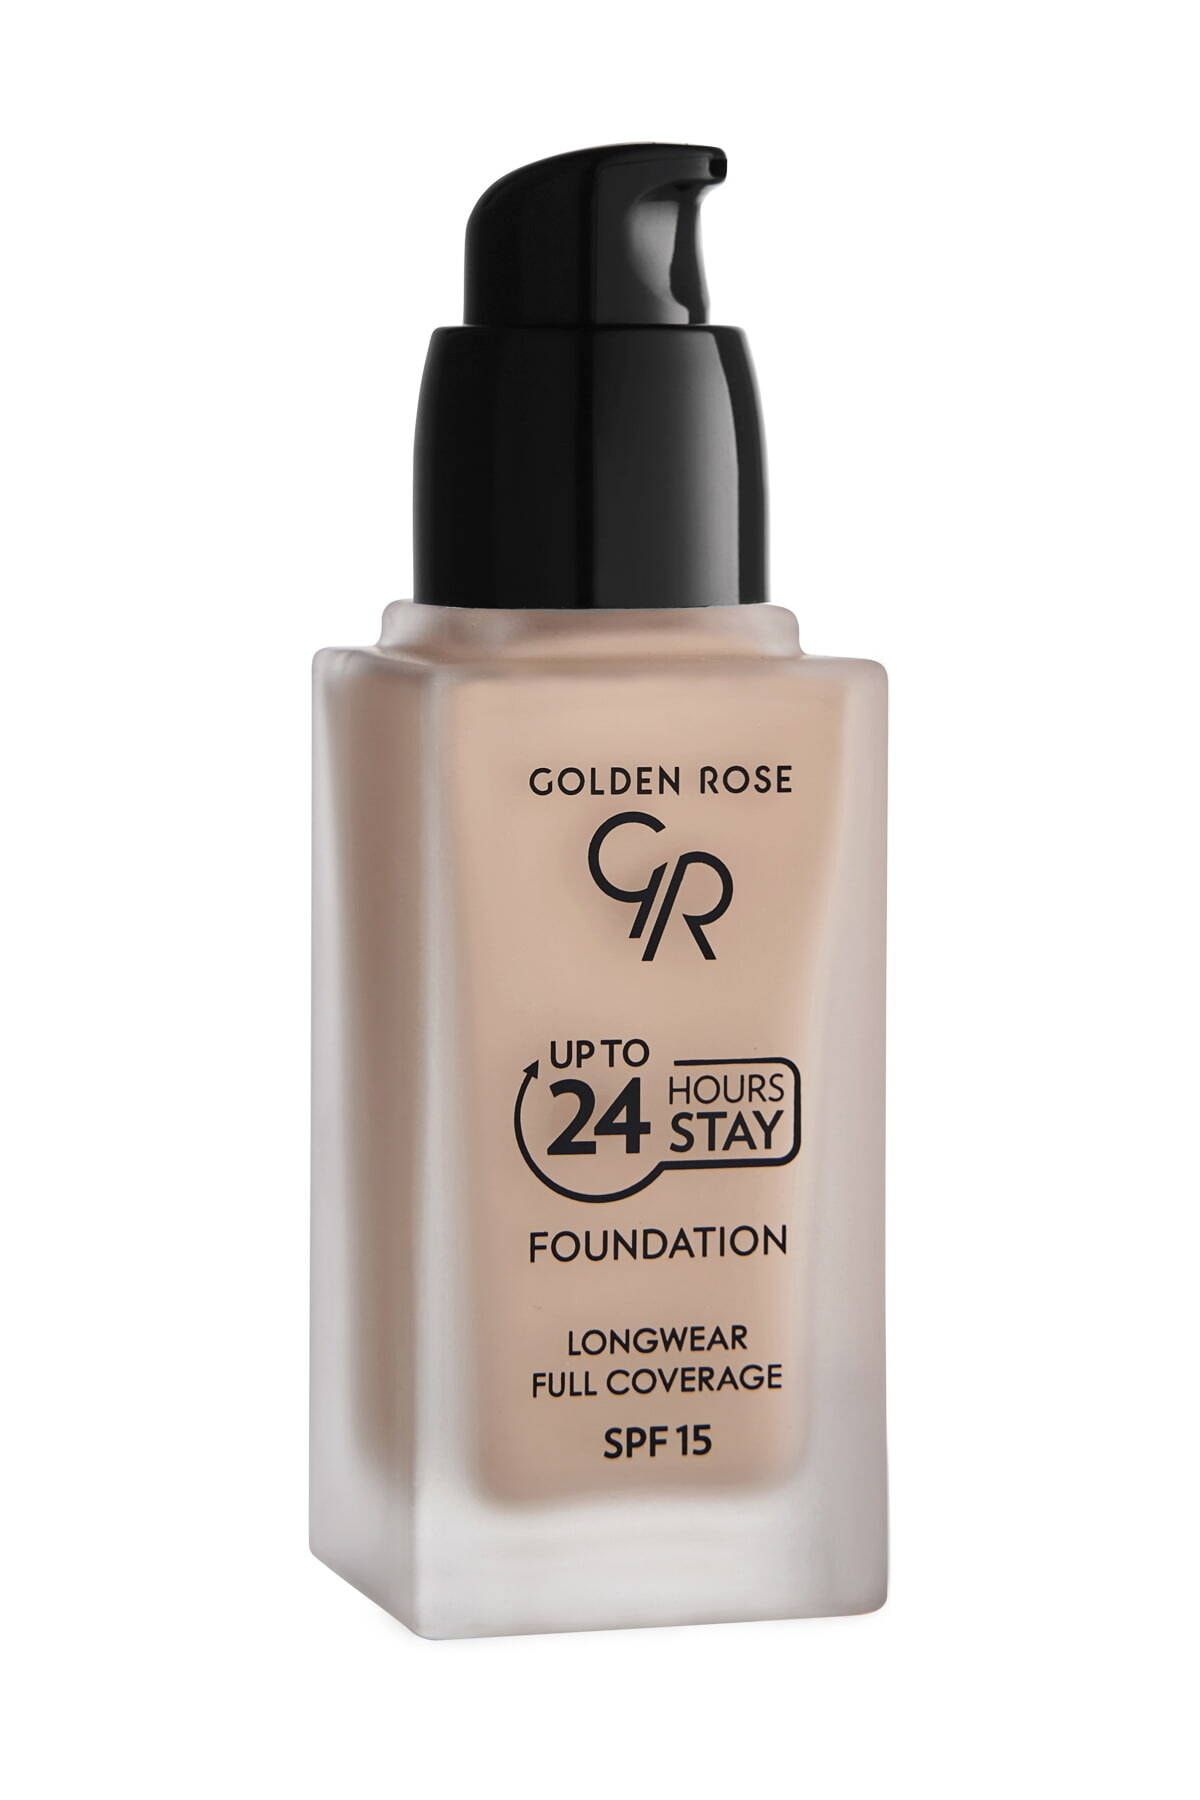 Golden Rose پایه ماندگار تا 24 ساعته بدون نیاز به تجدید آرایش